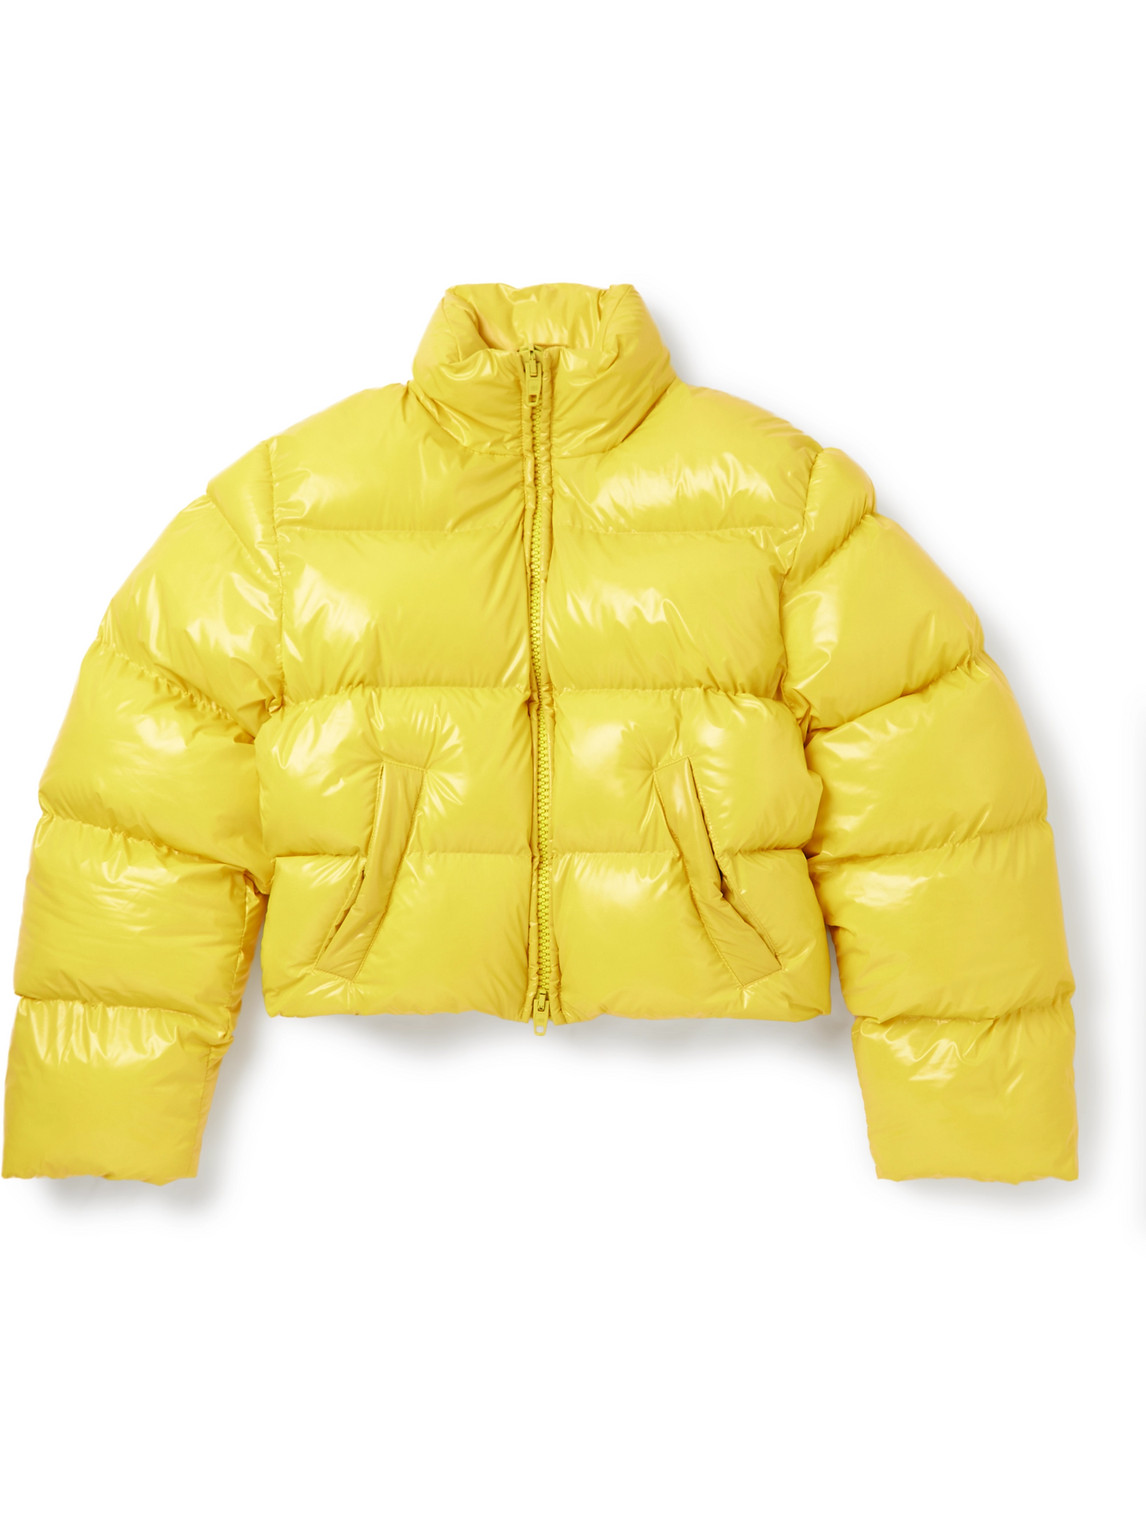 Balenciaga - Cropped Padded Shell Jacket - Men - Yellow - M von Balenciaga